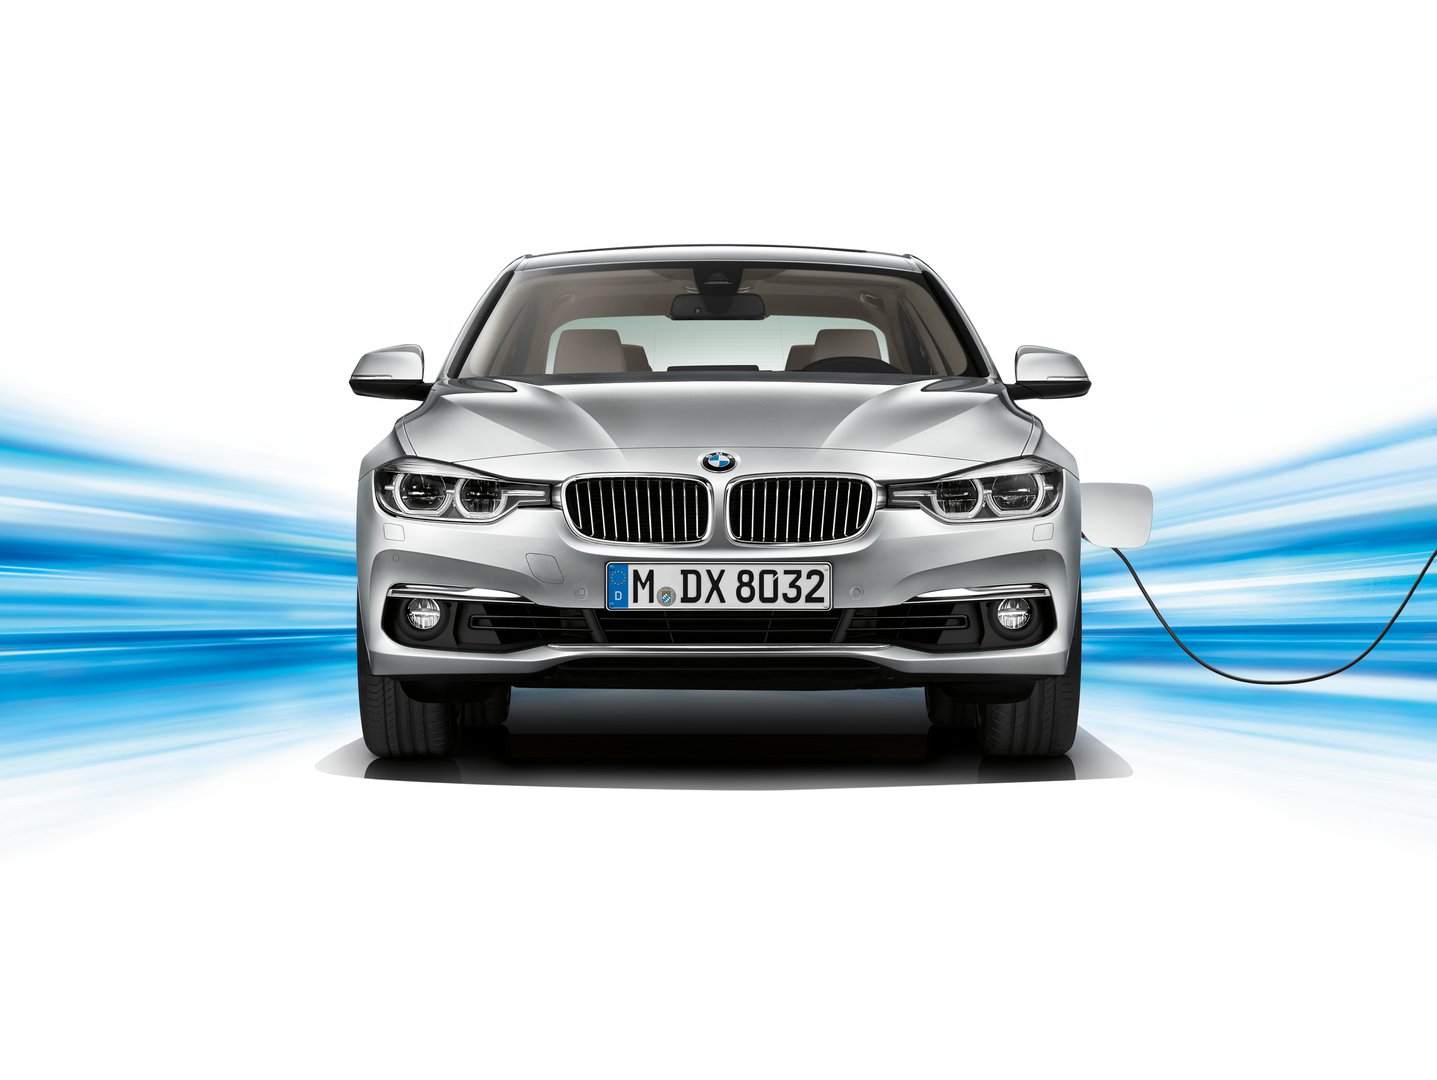 BMW's plug-in & hybrid electric master duet - Driving - Plugin-magazine.com